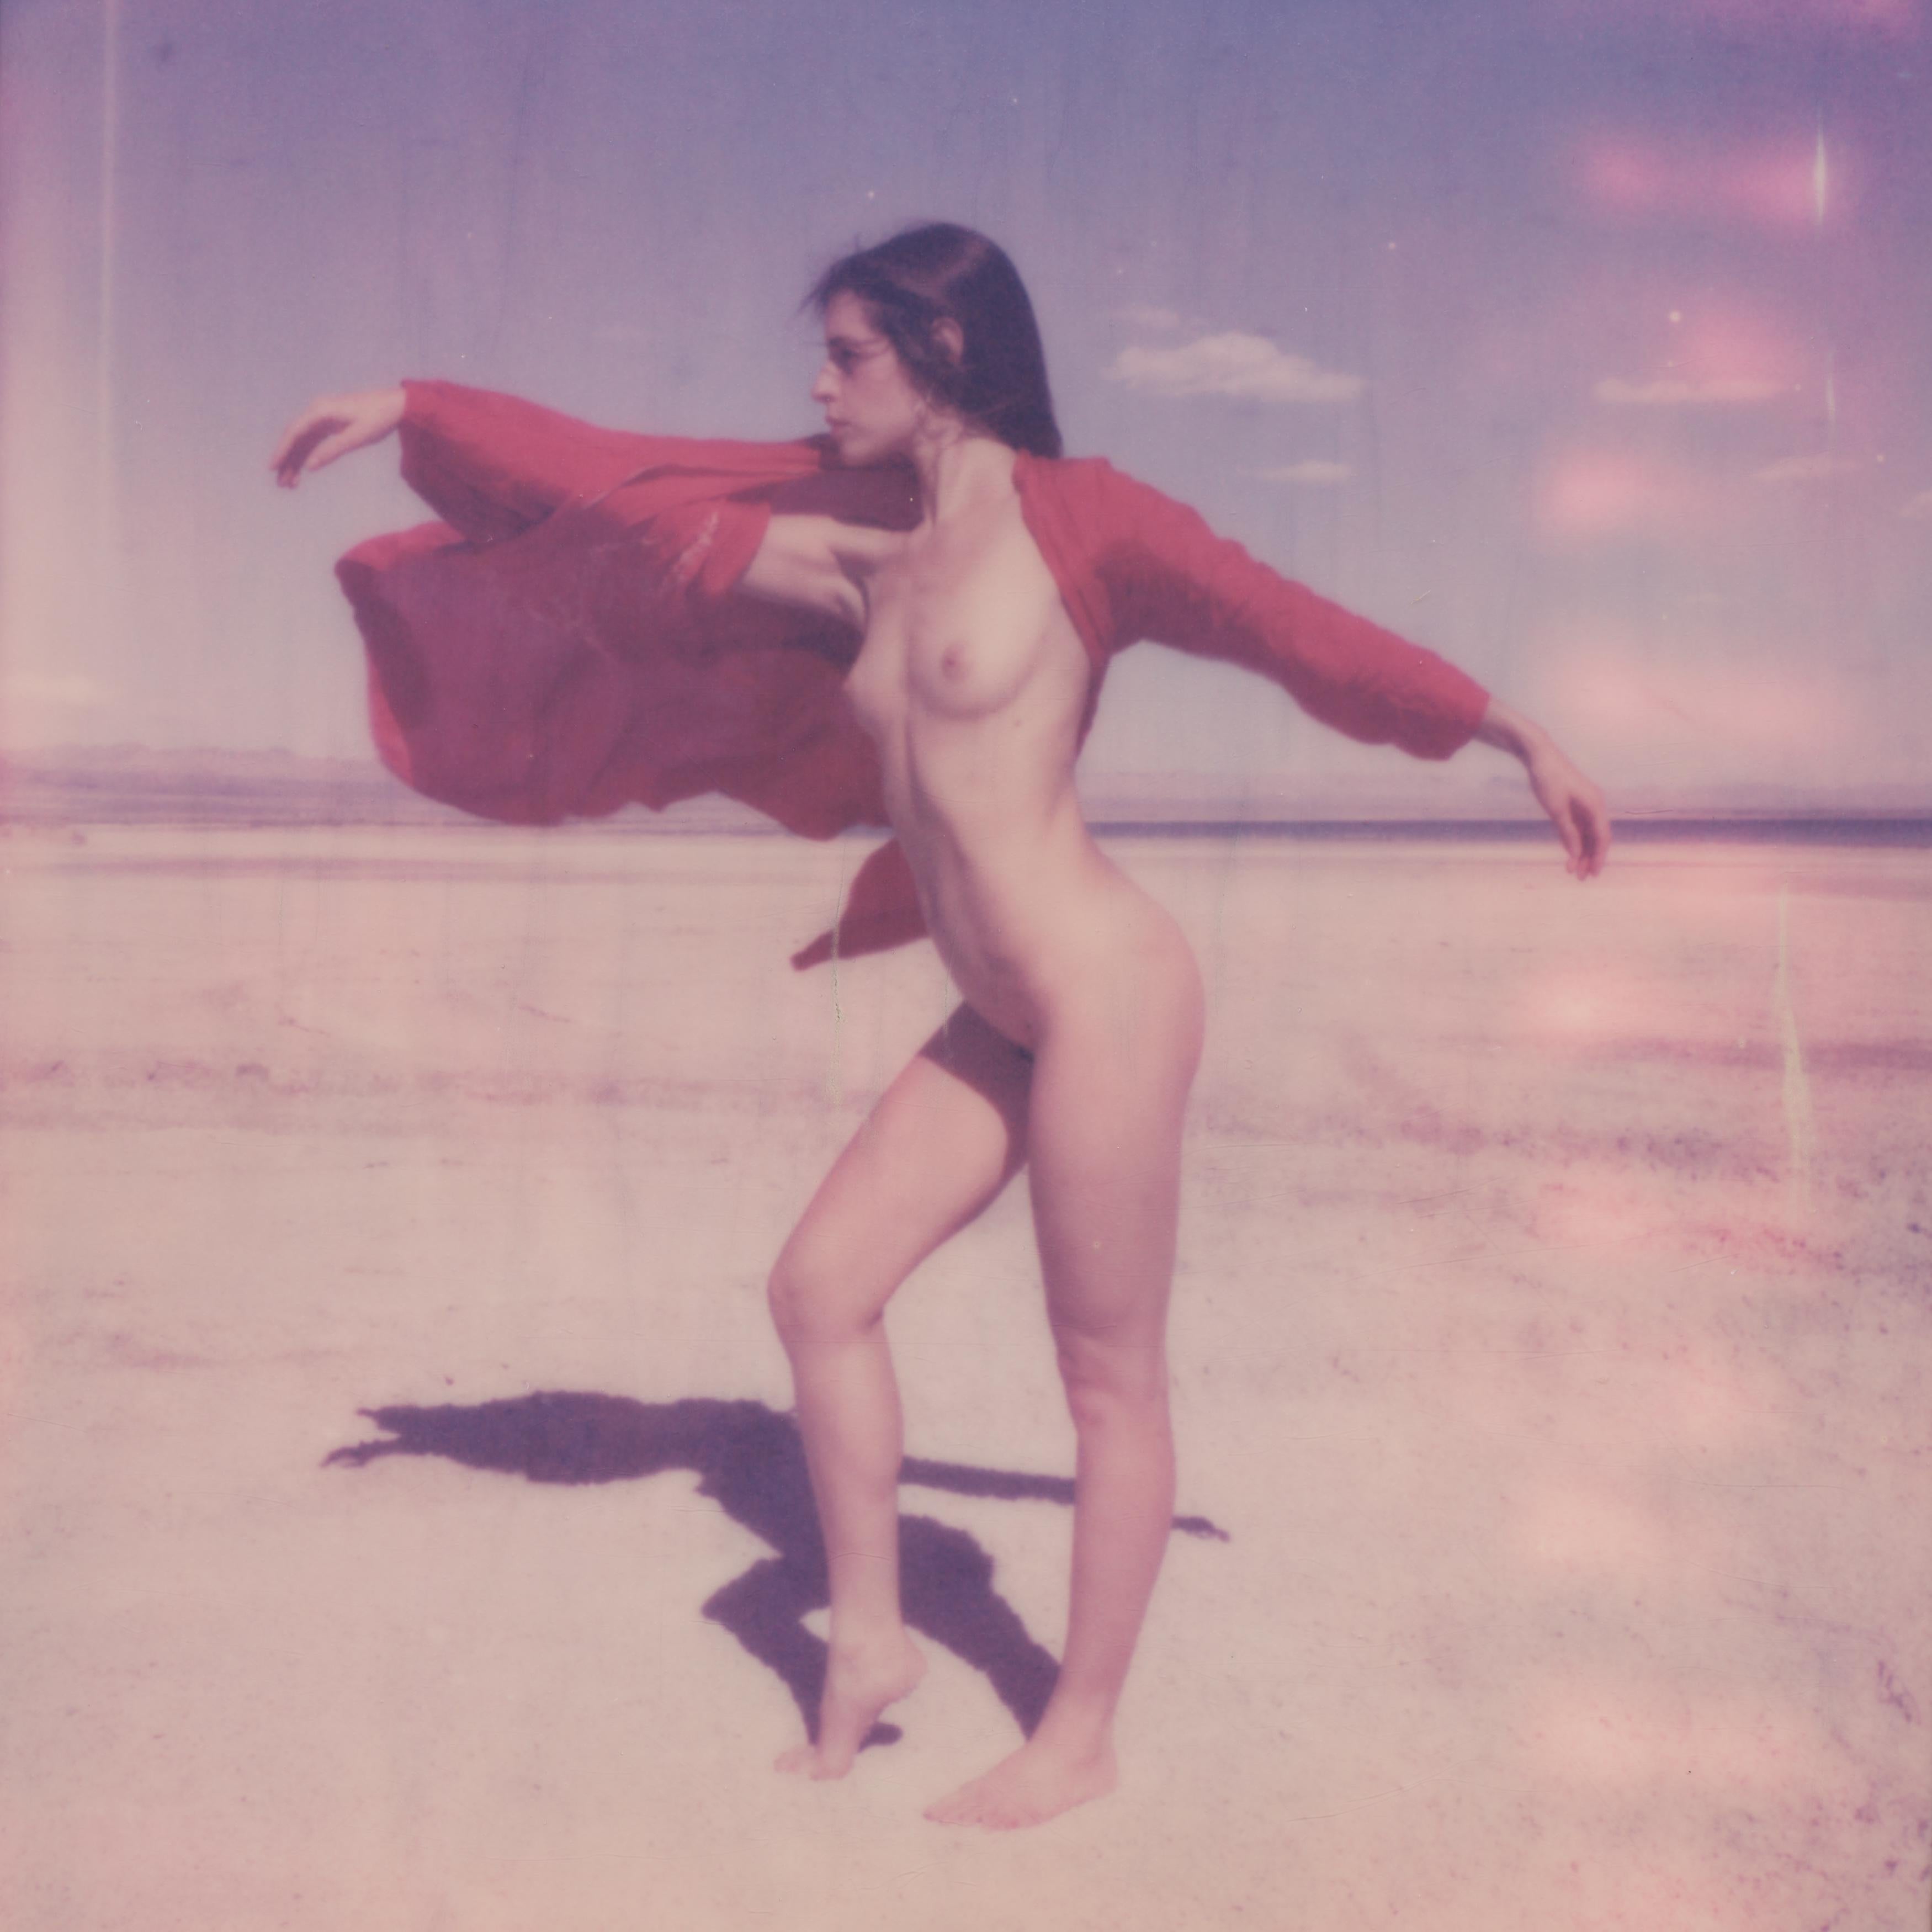 Kirsten Thys van den Audenaerde Nude Photograph – Fly (Bombay Beach) - Contemporary, Polaroid, Farbe, Frauen, 21. Jahrhundert